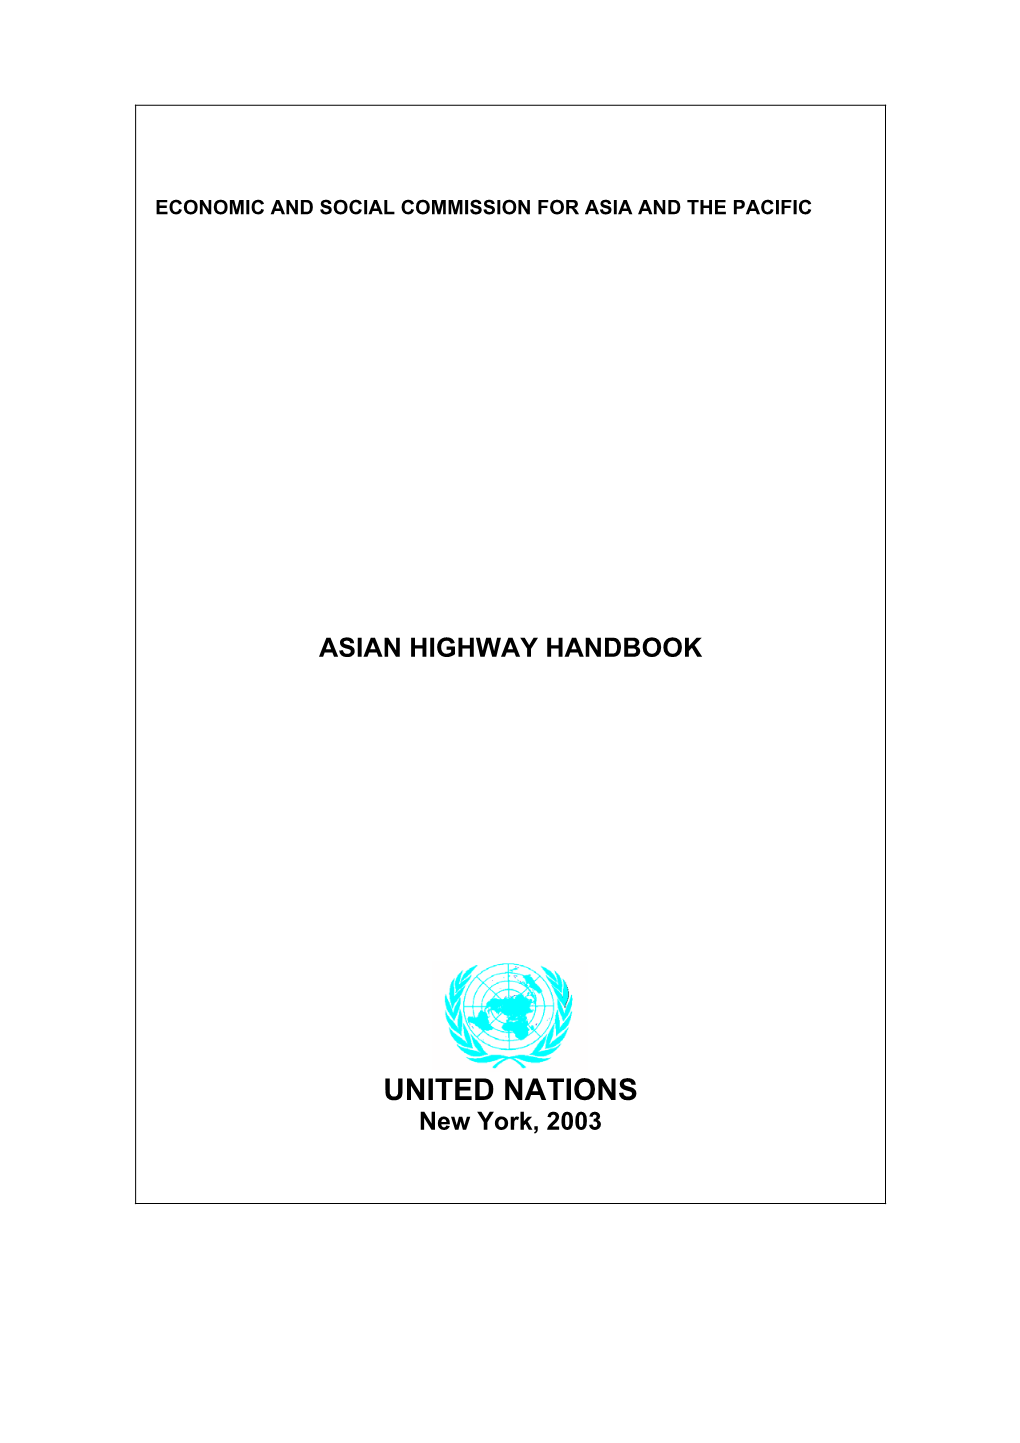 Asian Highway Handbook United Nations